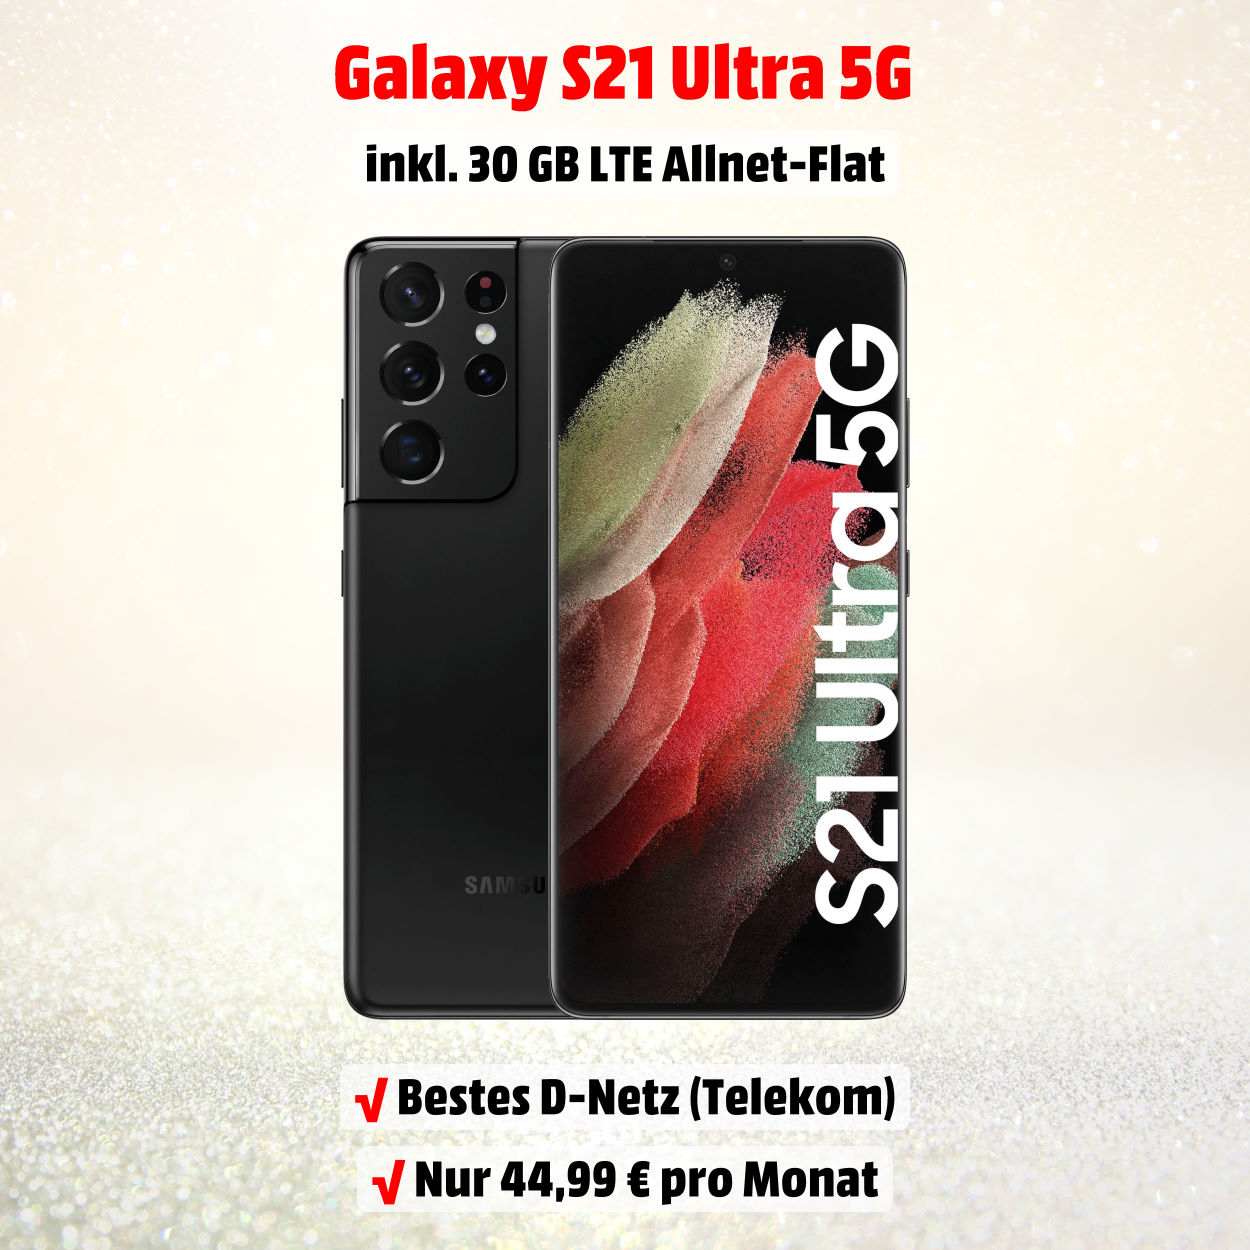 Galaxy S21 Ultra 5G inkl. 30 GB LTE Allnet-Flat im besten D-Netz zum Bestpreis